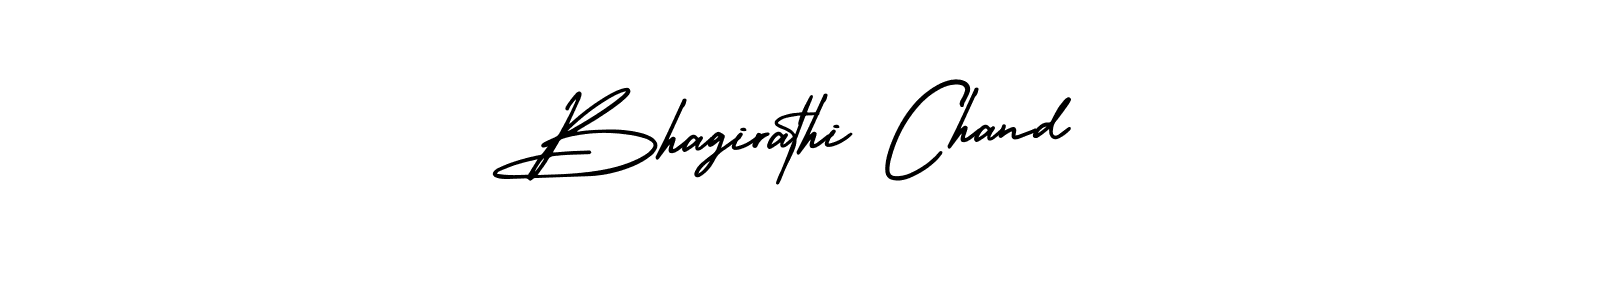 How to Draw Bhagirathi Chand signature style? AmerikaSignatureDemo-Regular is a latest design signature styles for name Bhagirathi Chand. Bhagirathi Chand signature style 3 images and pictures png